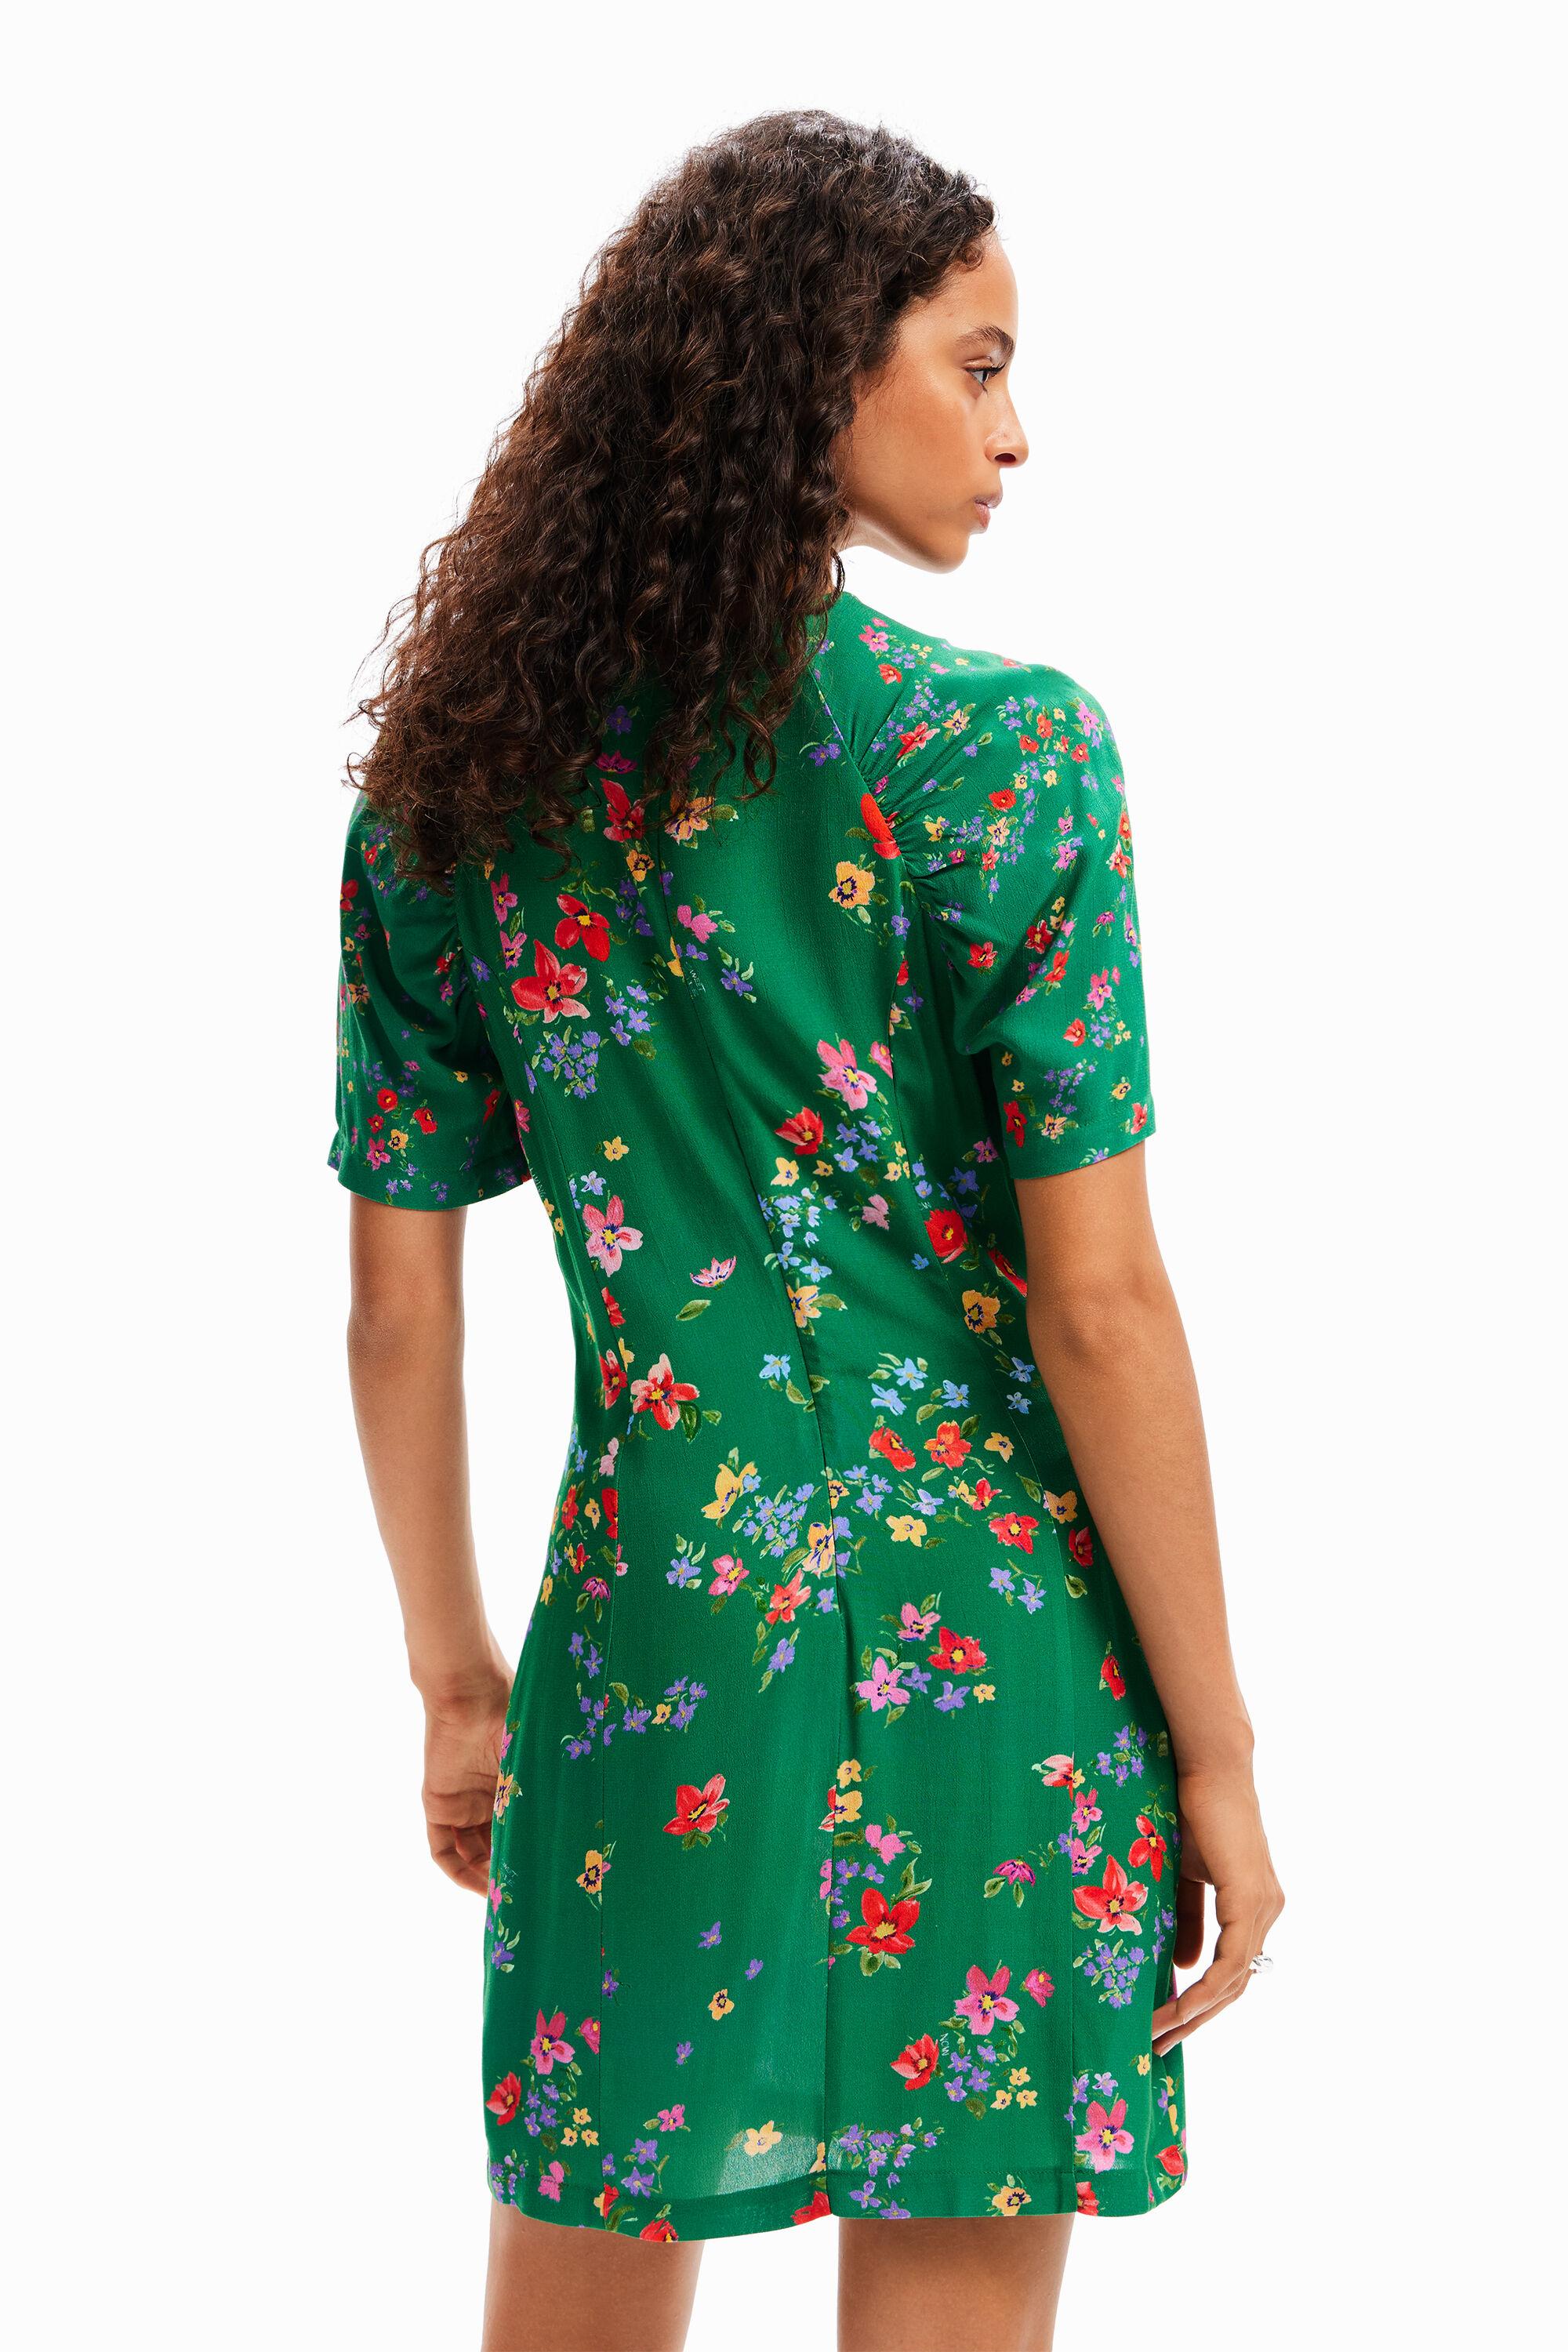 Desigual Short Floral Dress in Green | Lyst